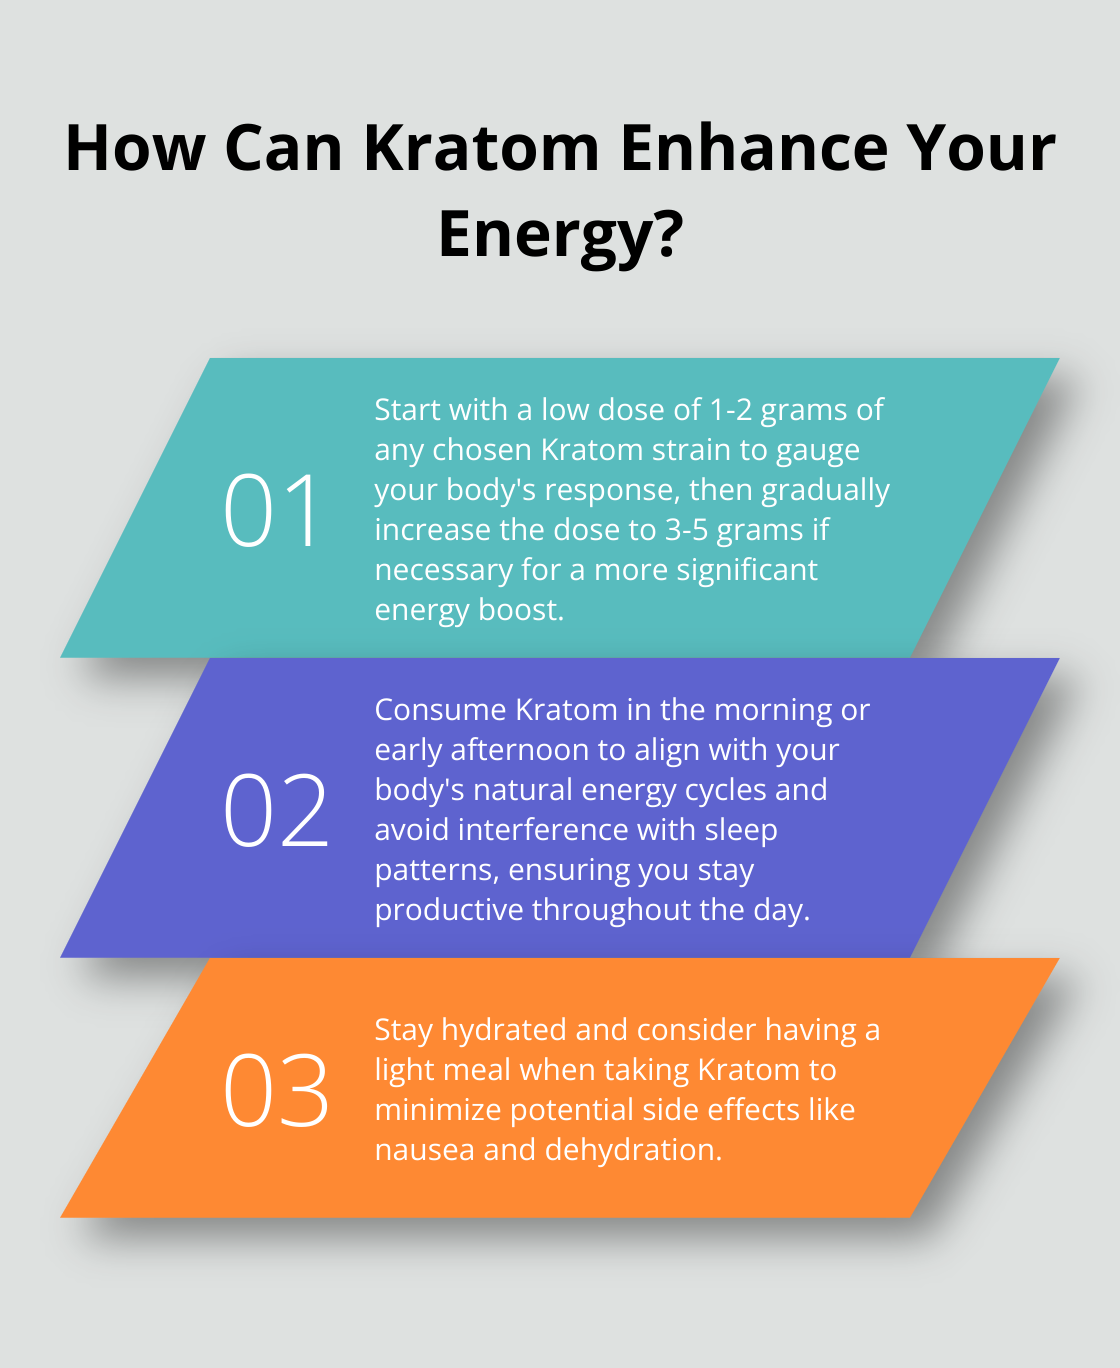 Fact - How Can Kratom Enhance Your Energy?